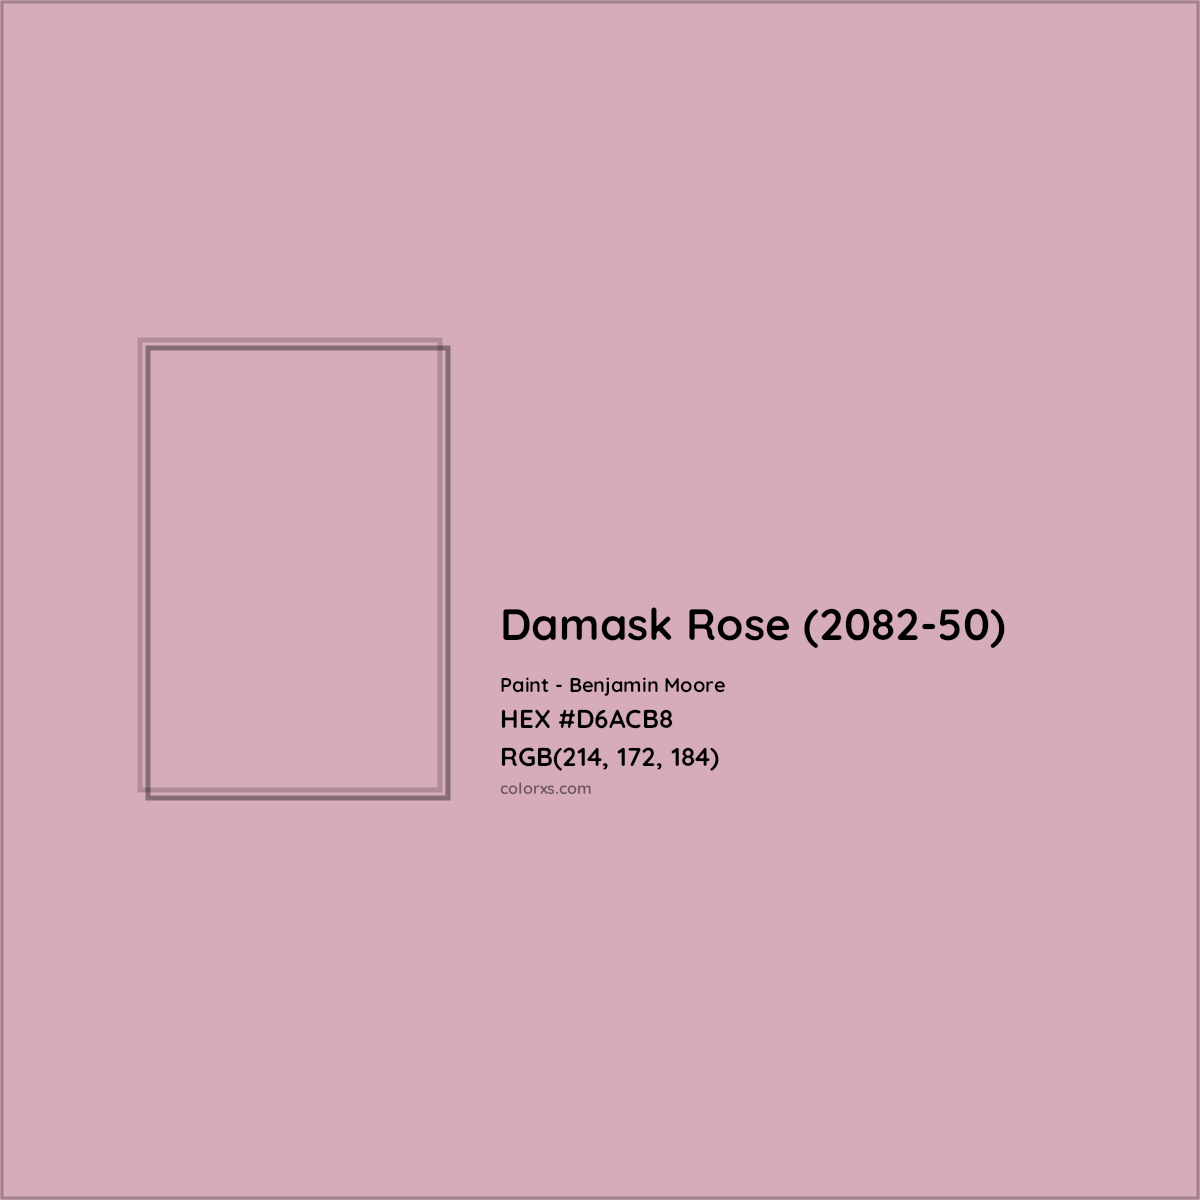 HEX #D6ACB8 Damask Rose (2082-50) Paint Benjamin Moore - Color Code